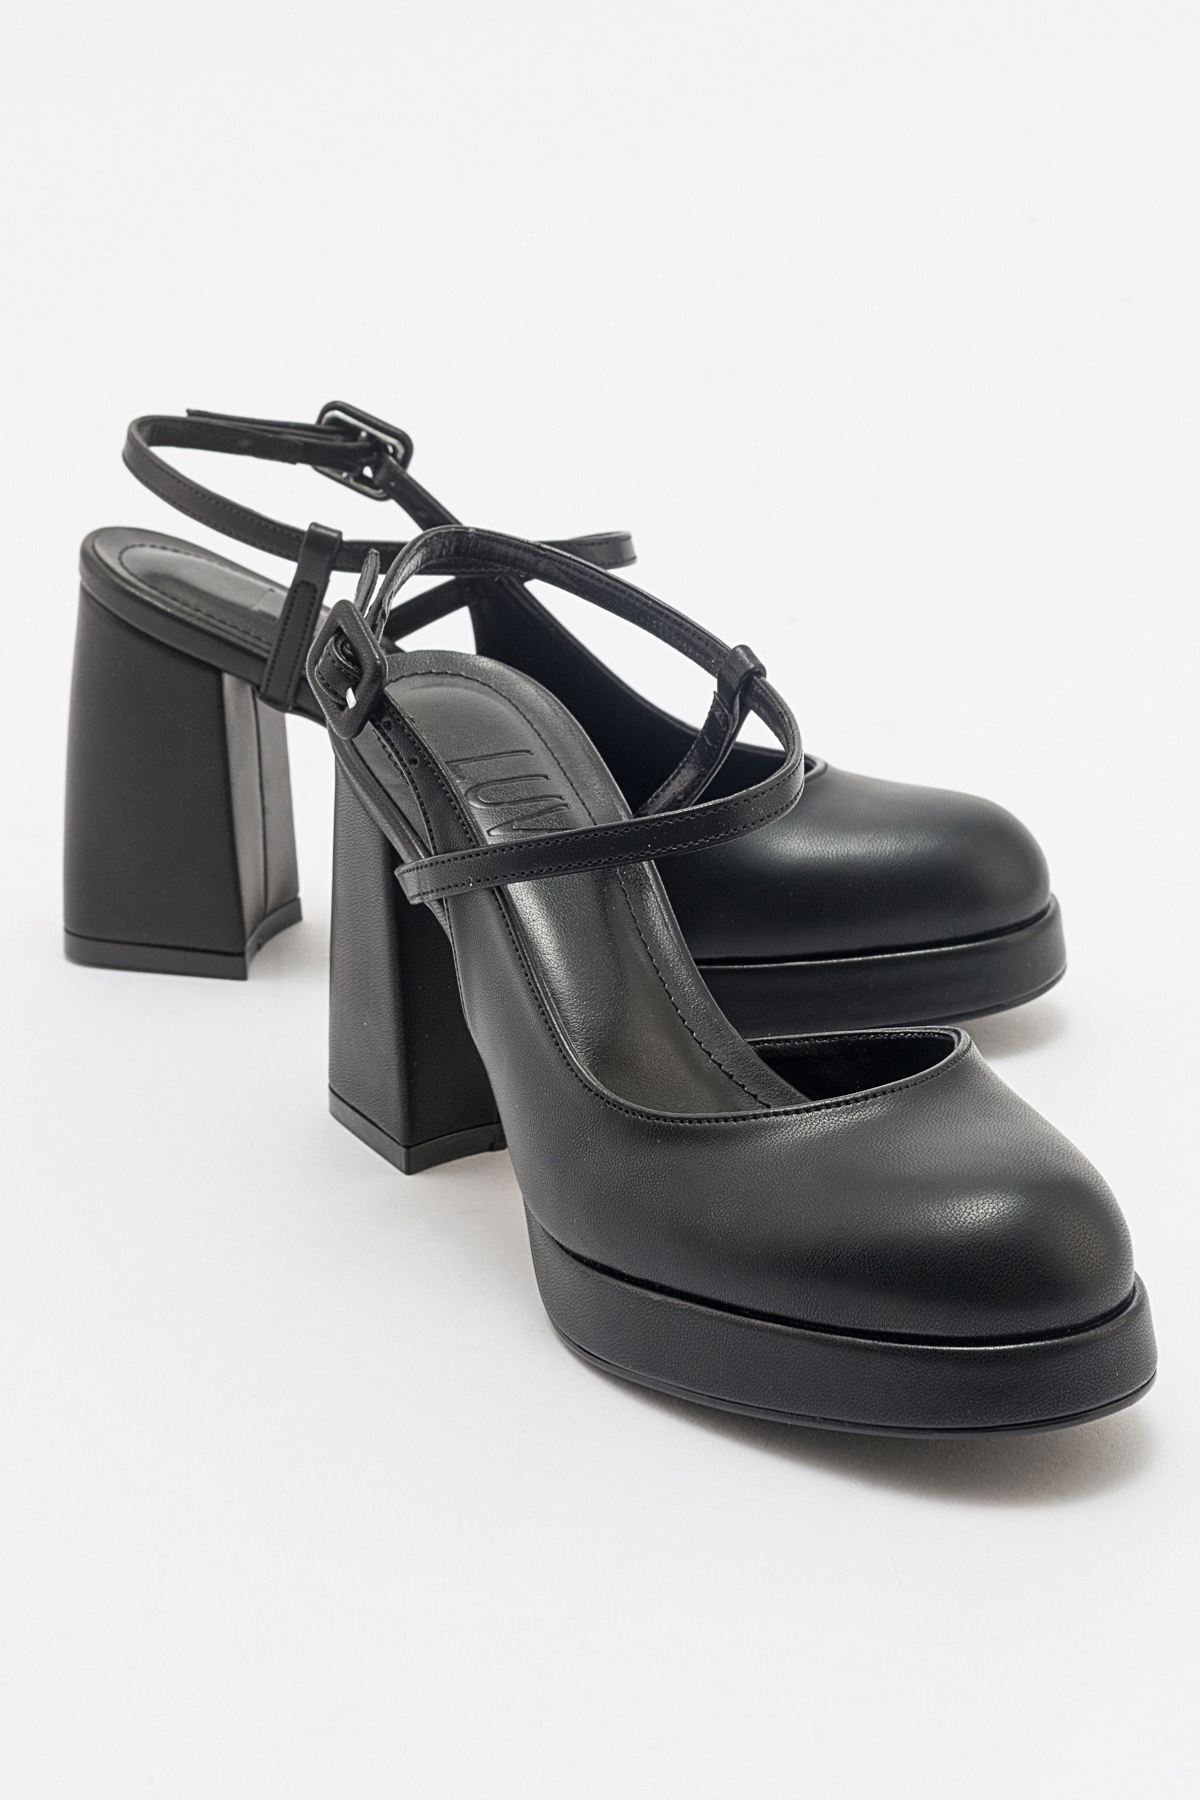 LuviShoes CAPE Black Skin Women's Platform Heeled Shoes